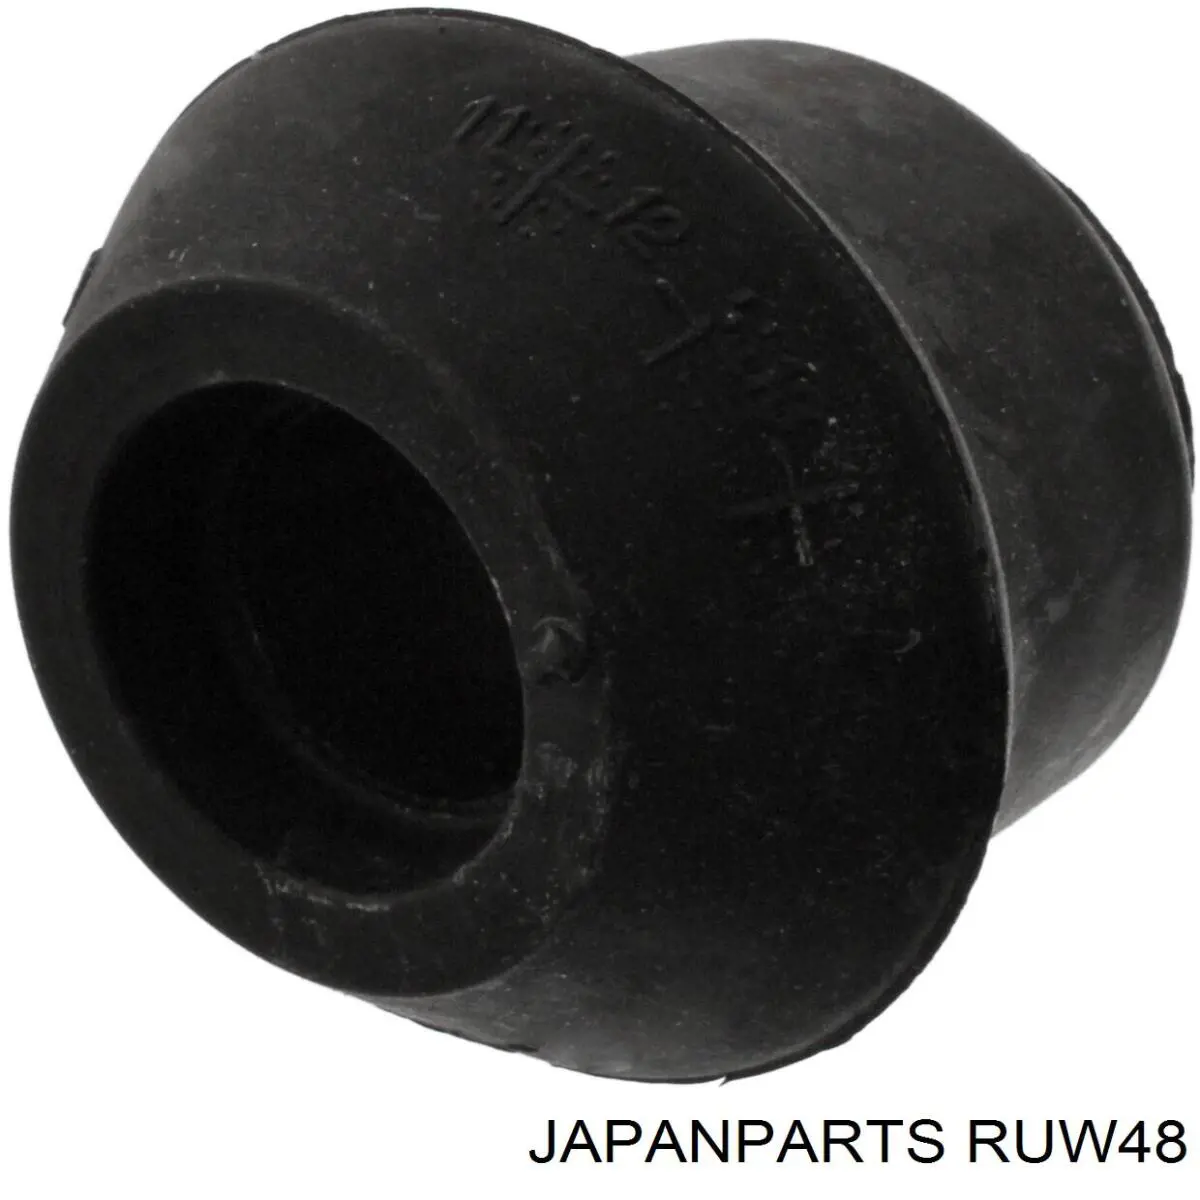 RU-W48 Japan Parts bloco silencioso de estabilizador dianteiro